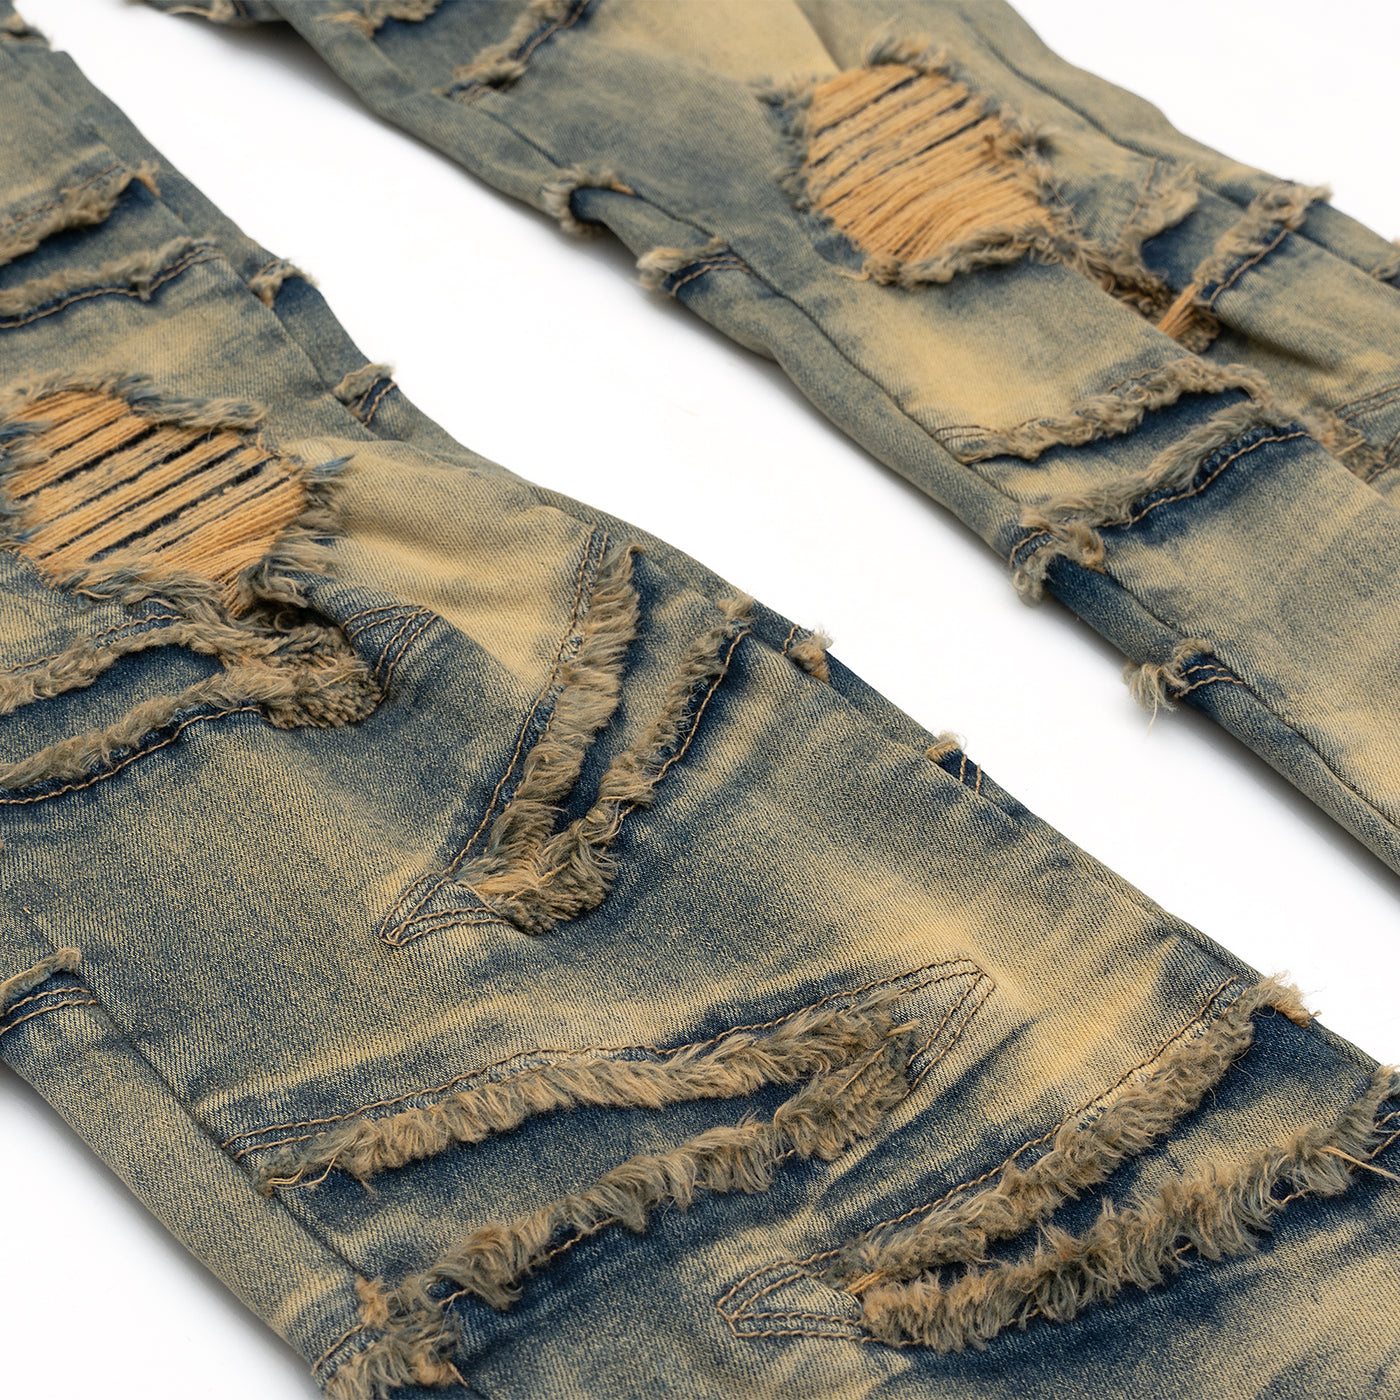 M1956 Lombardi Jeans - Dirt